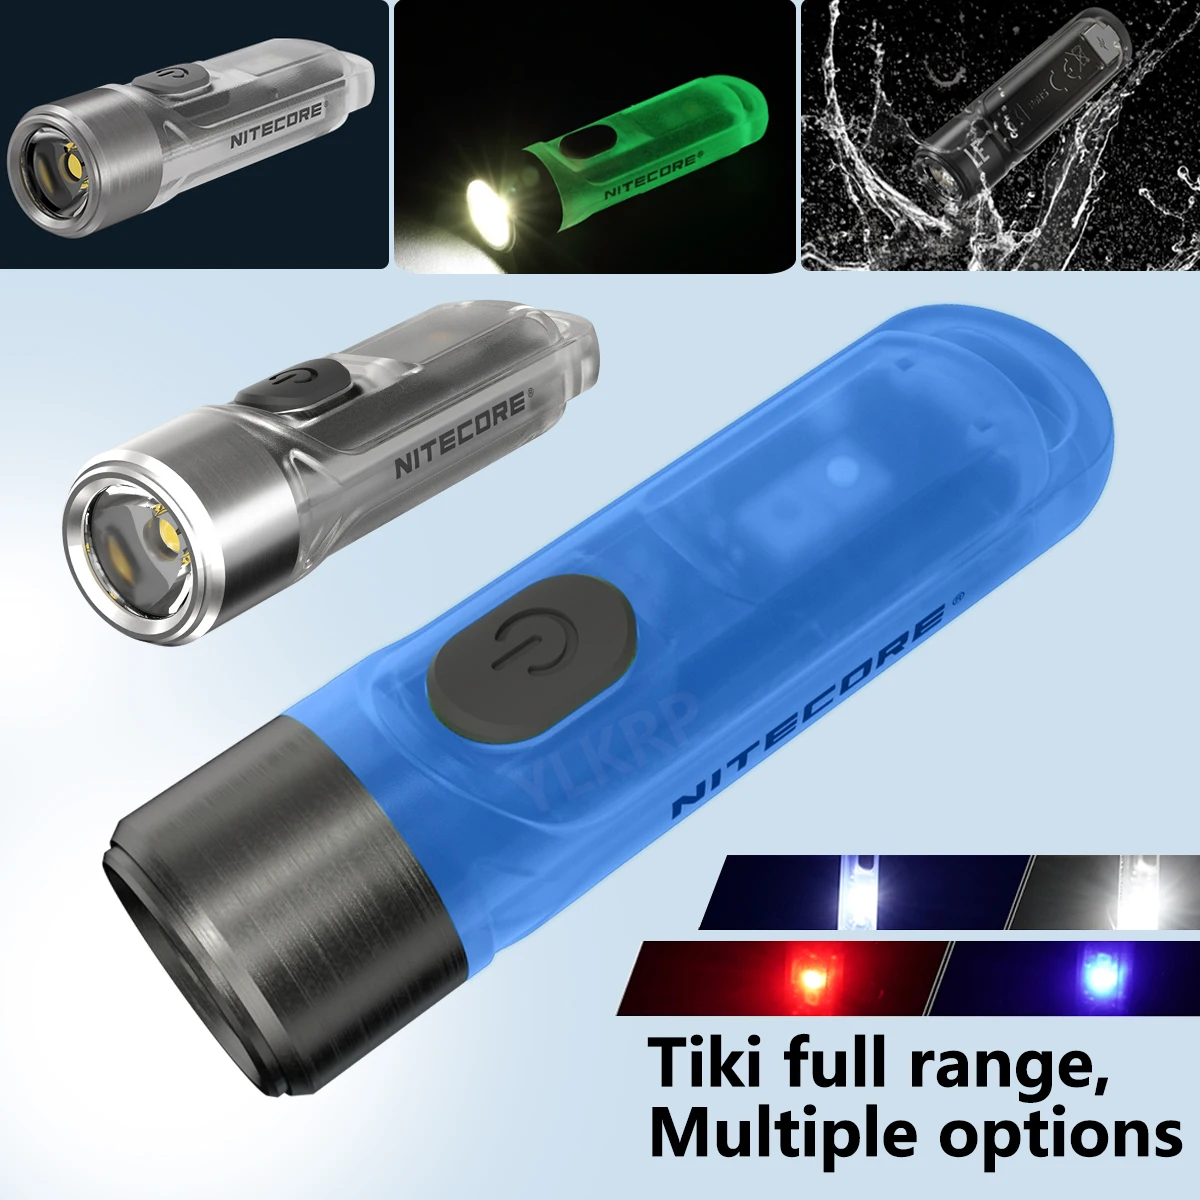 100% Original NITECORE TIKI GITD TIKI LE 300 Lumens MINI futuristic keychain light USB Rechargeable mini led torch Flashlights